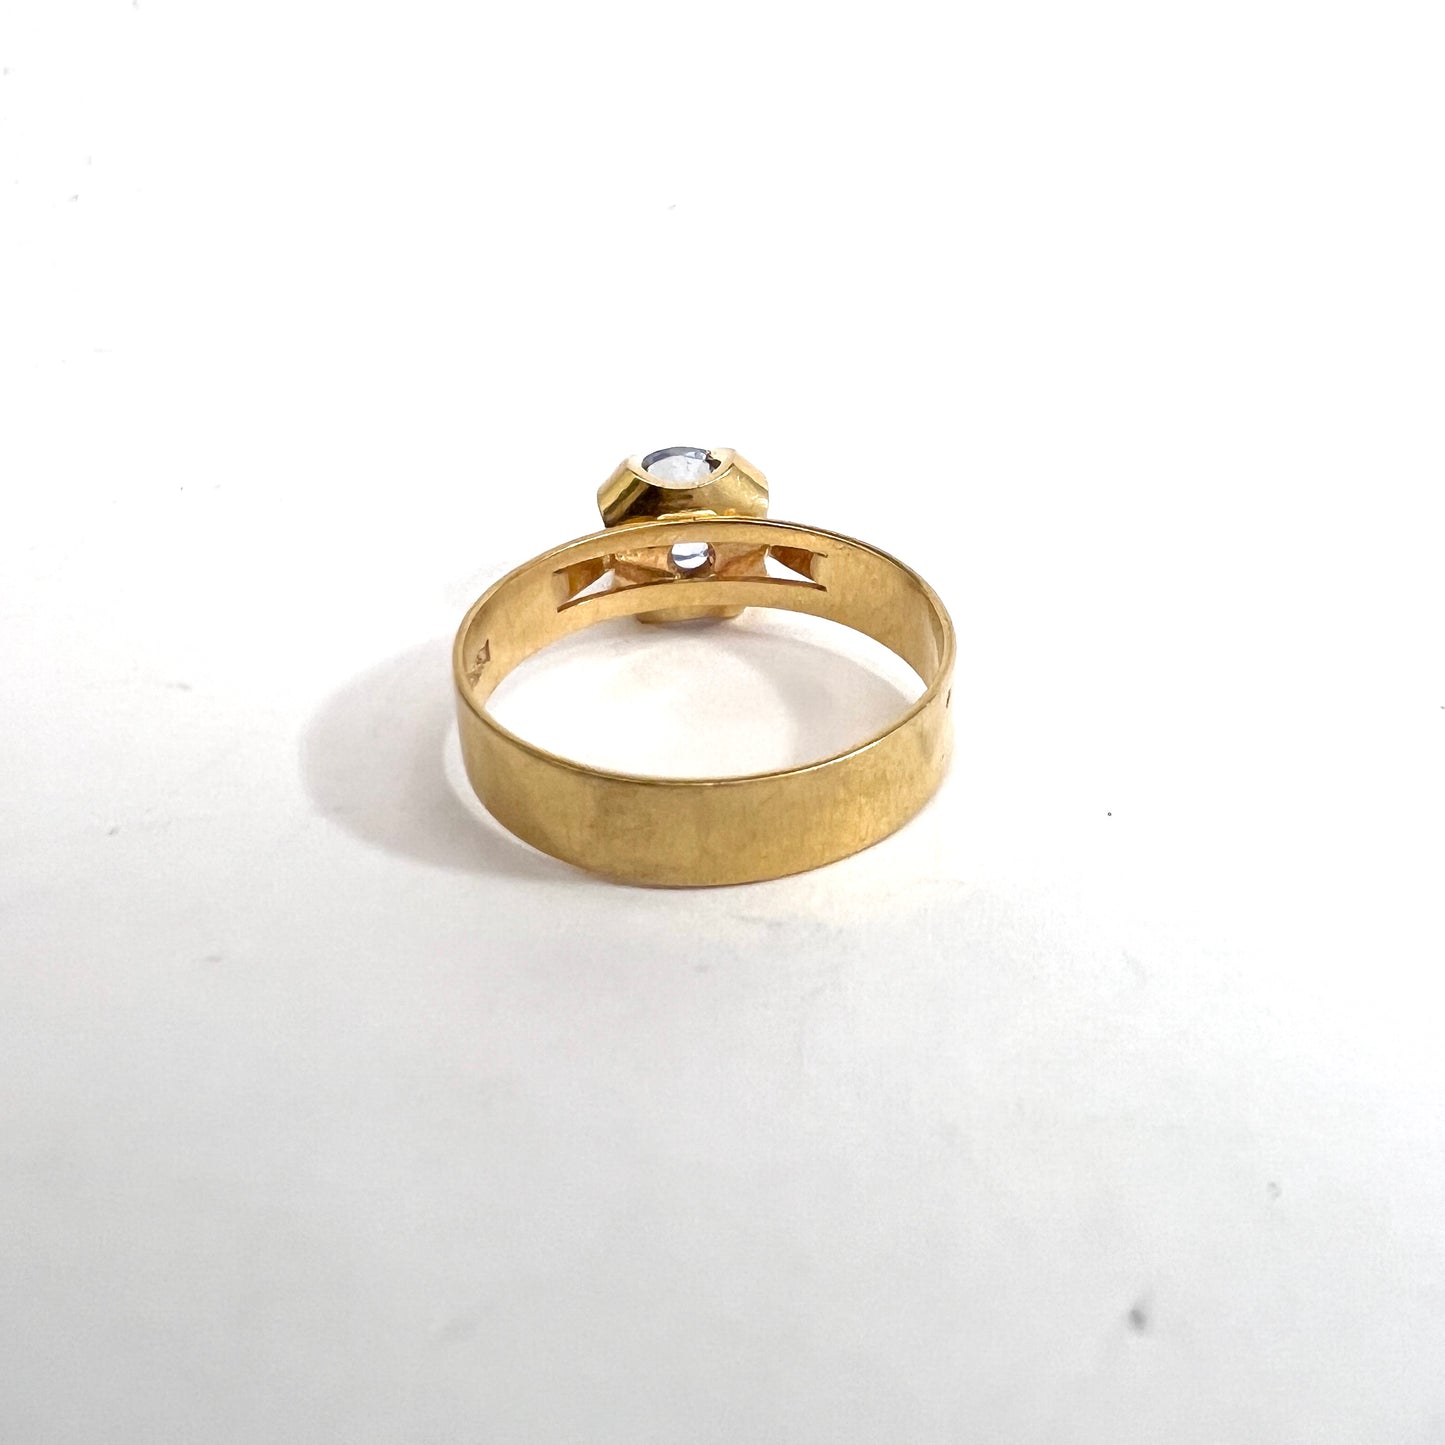 Ceson, Sweden 1969. Vintage 18k Gold Synthetic Spinel Ring.